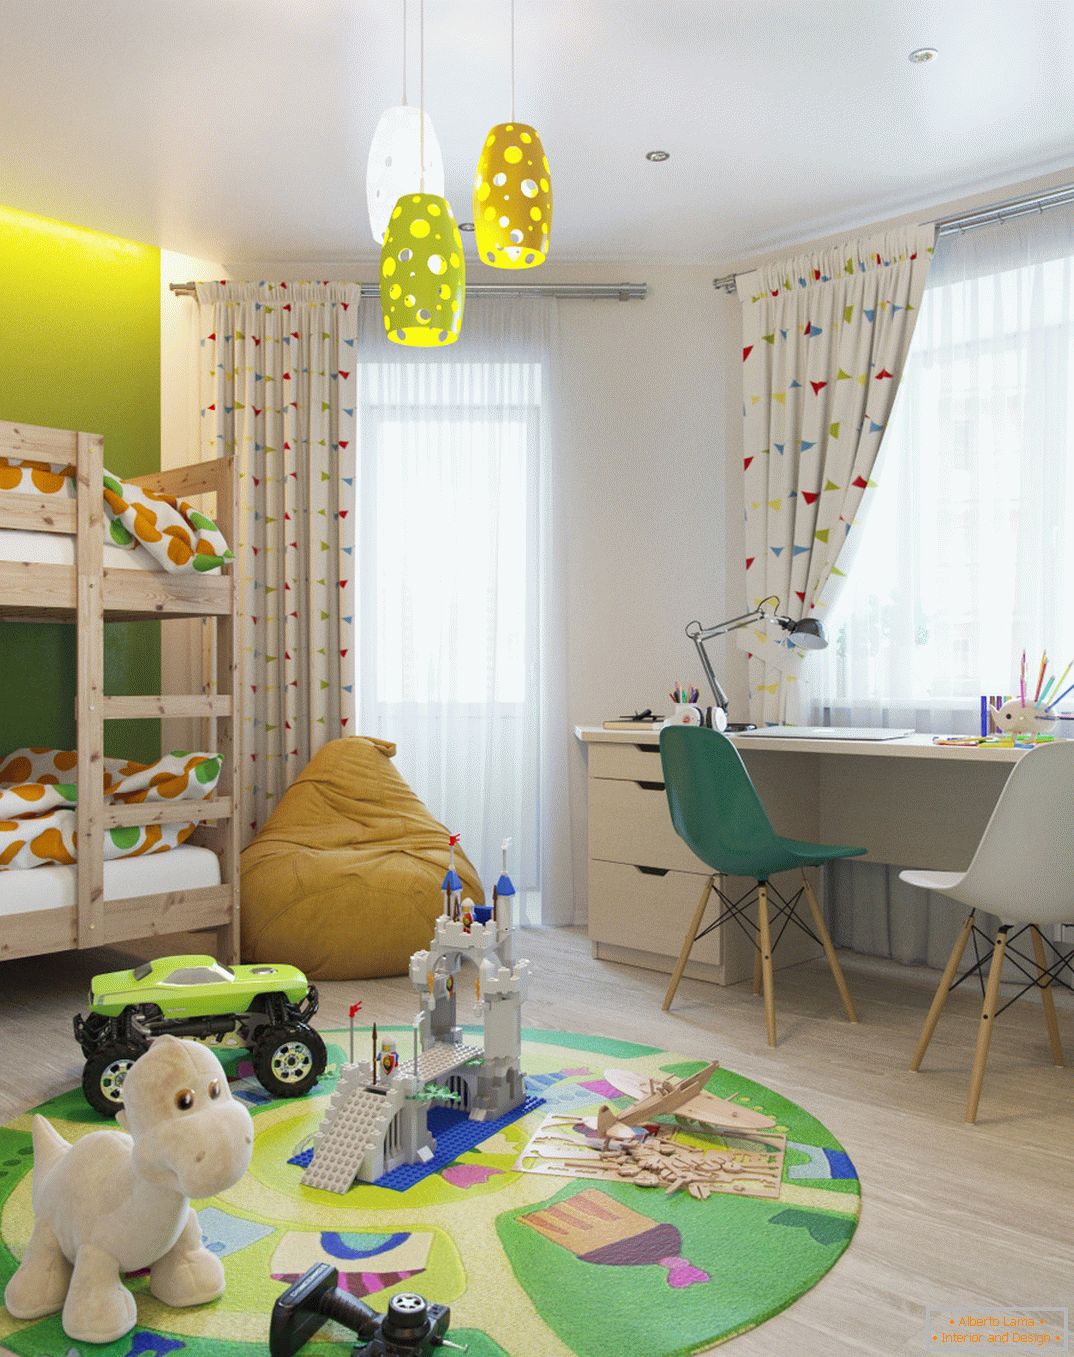 Designul luminos al camerei pentru copii